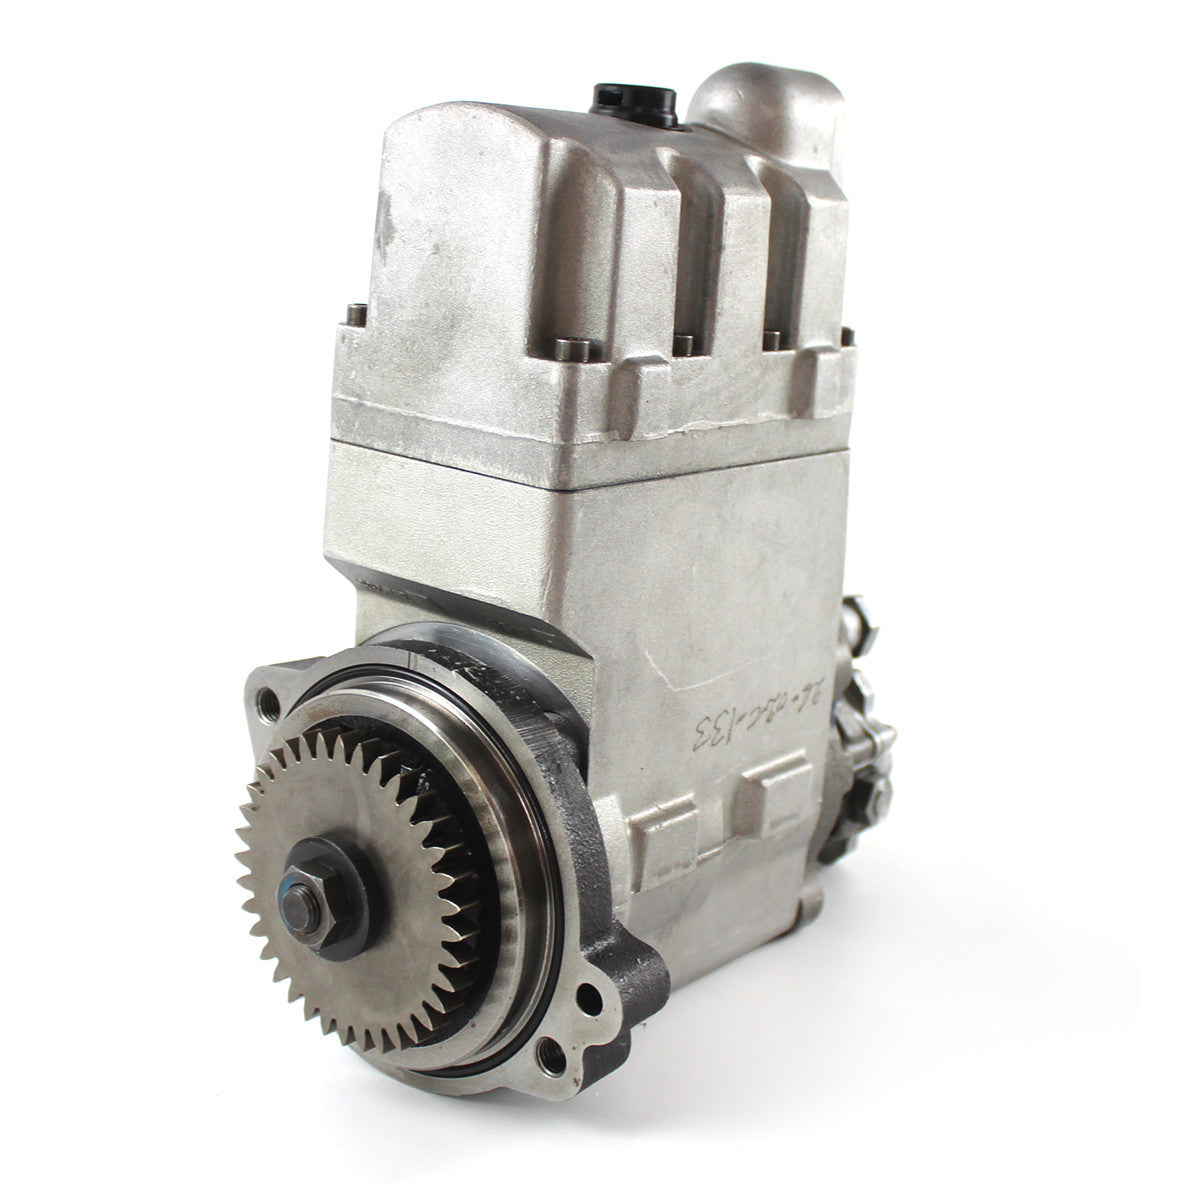 319-0678 3190678 Fuel Injection Pump for Caterpillar C7 C9 Engine 330D